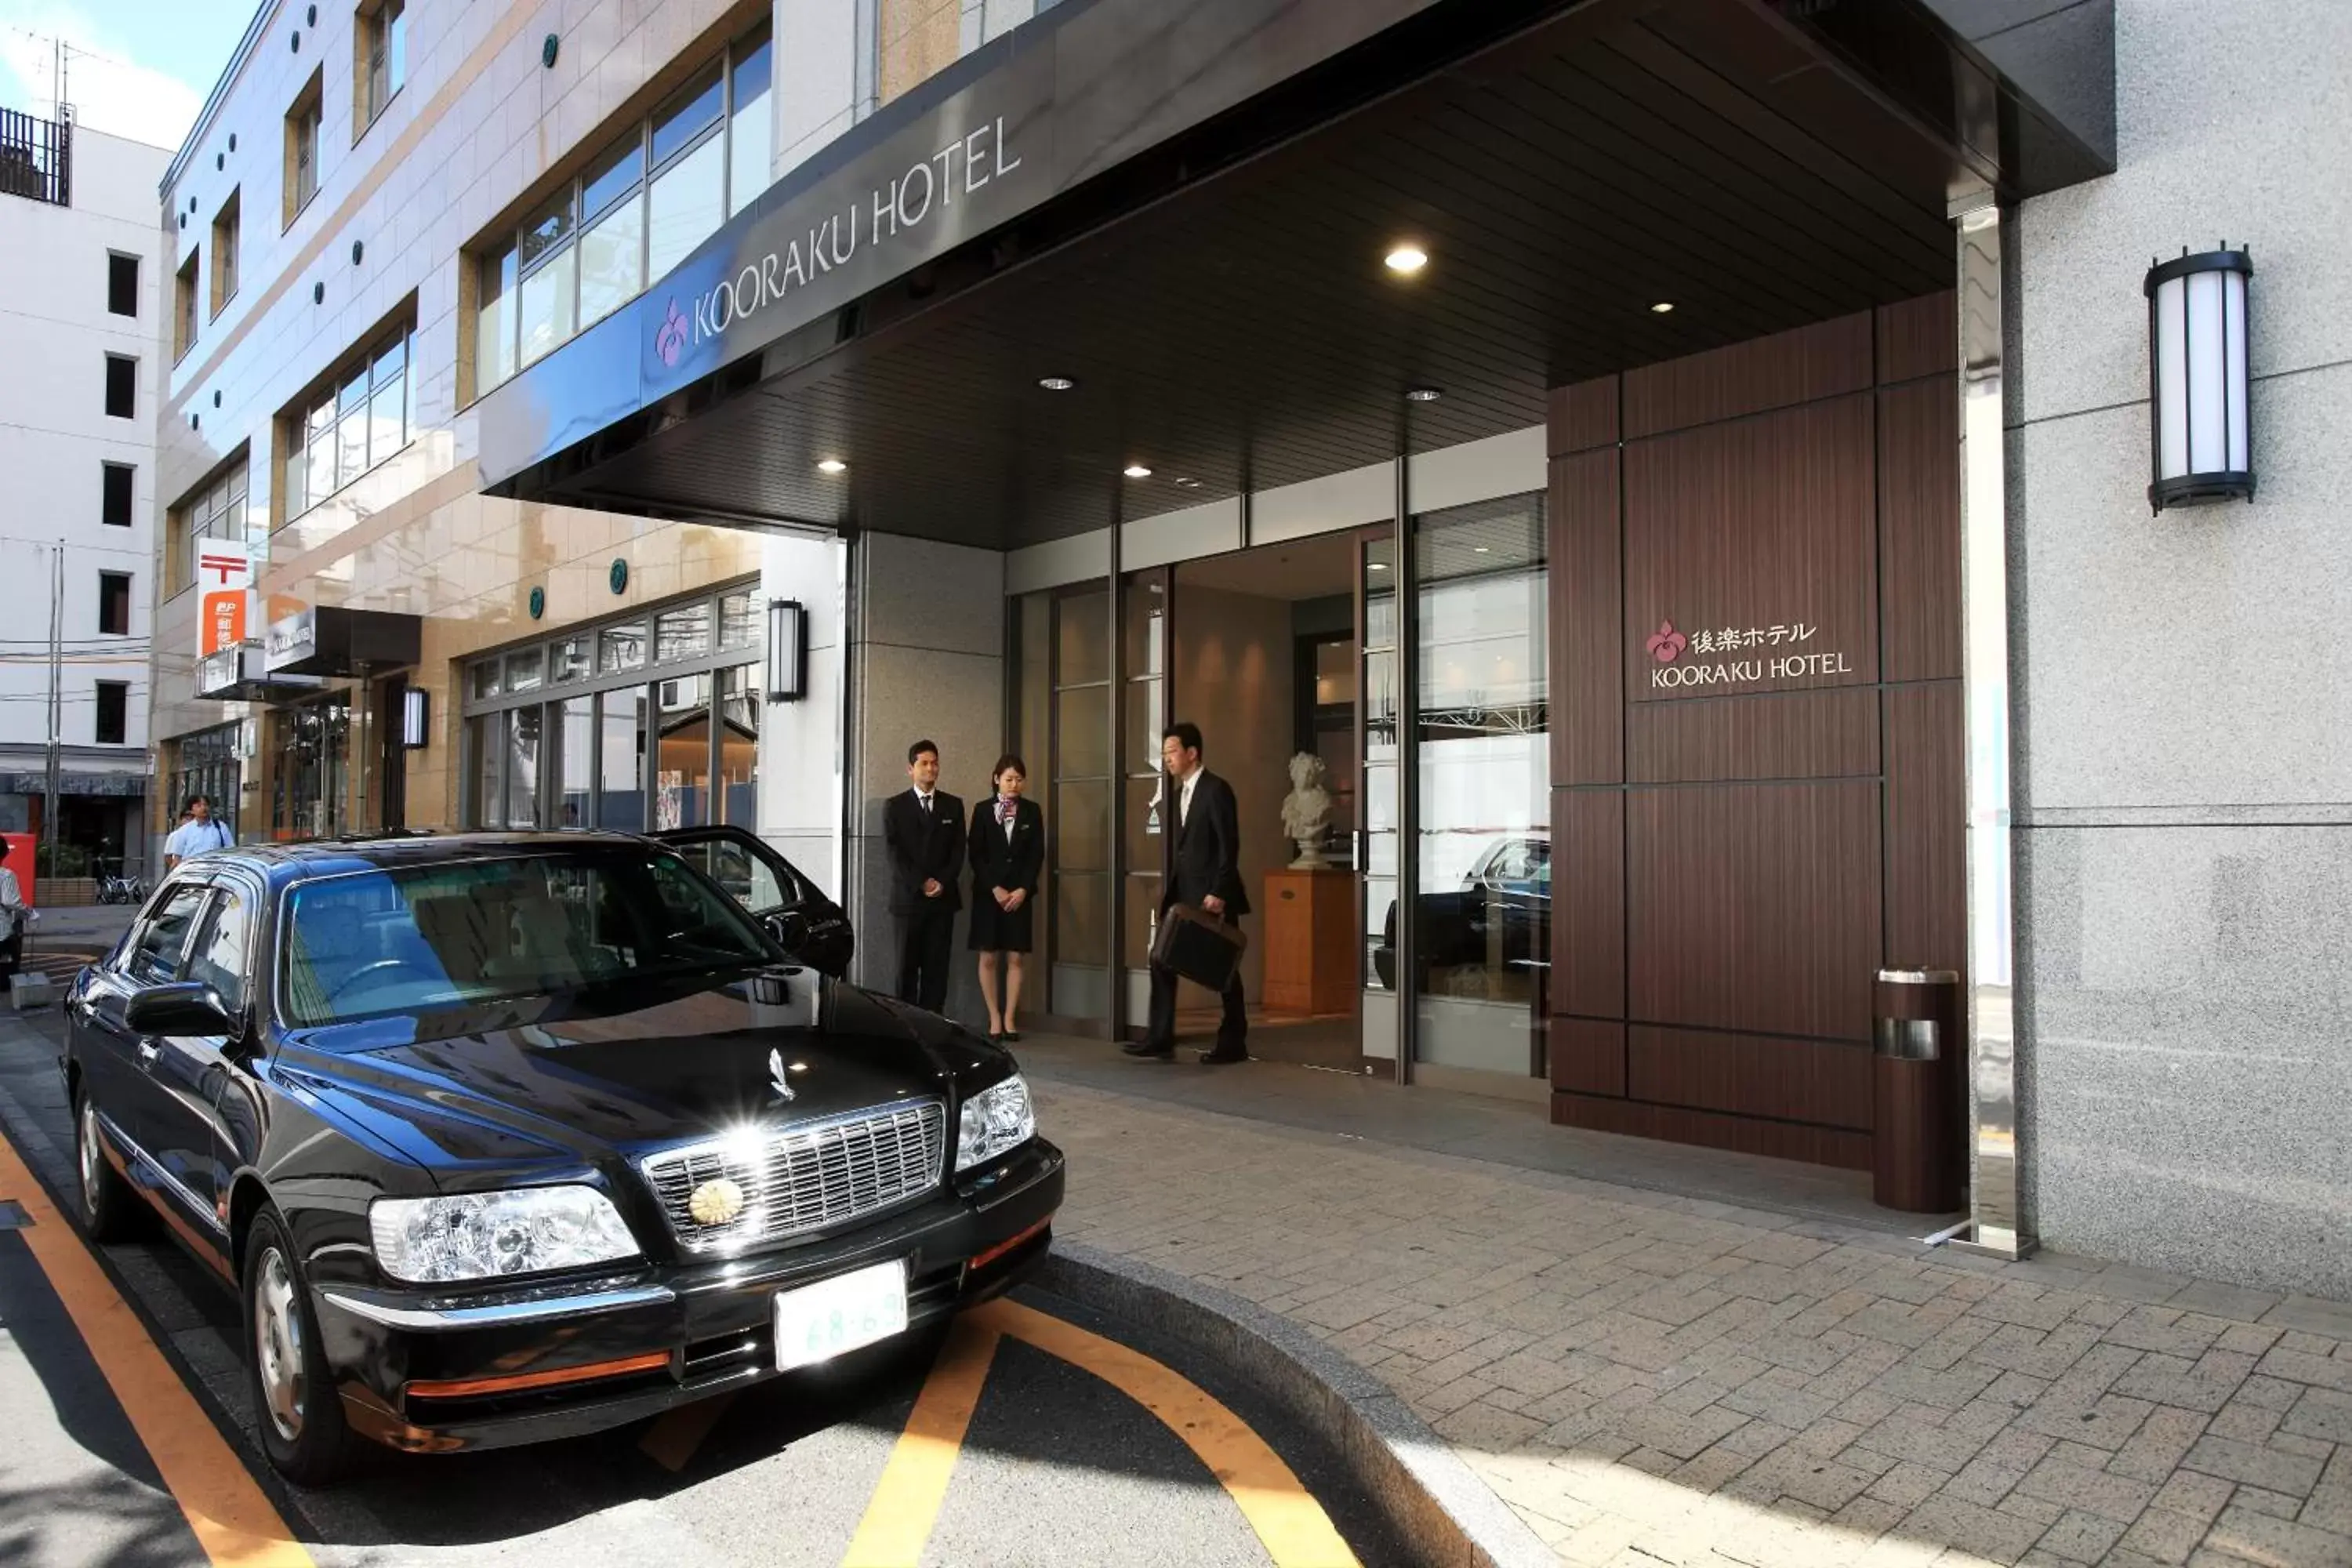 Facade/entrance in Okayama Koraku Hotel